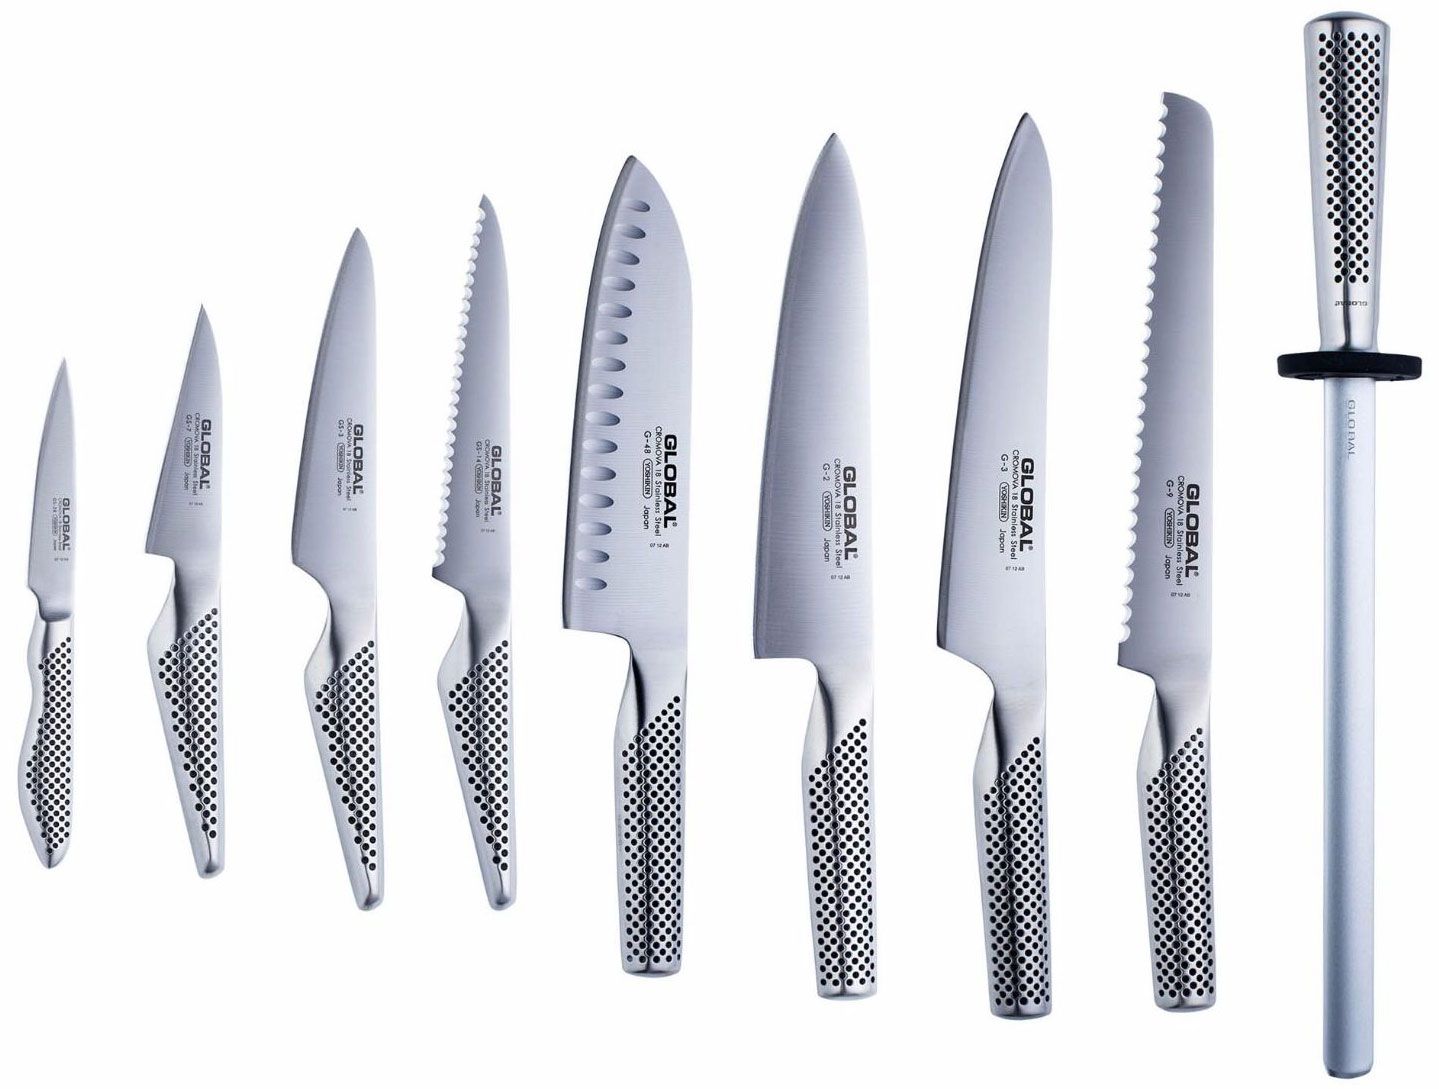 Global G-88/101ST Classic 10 Piece Kitchen Knife Block Set - KnifeCenter